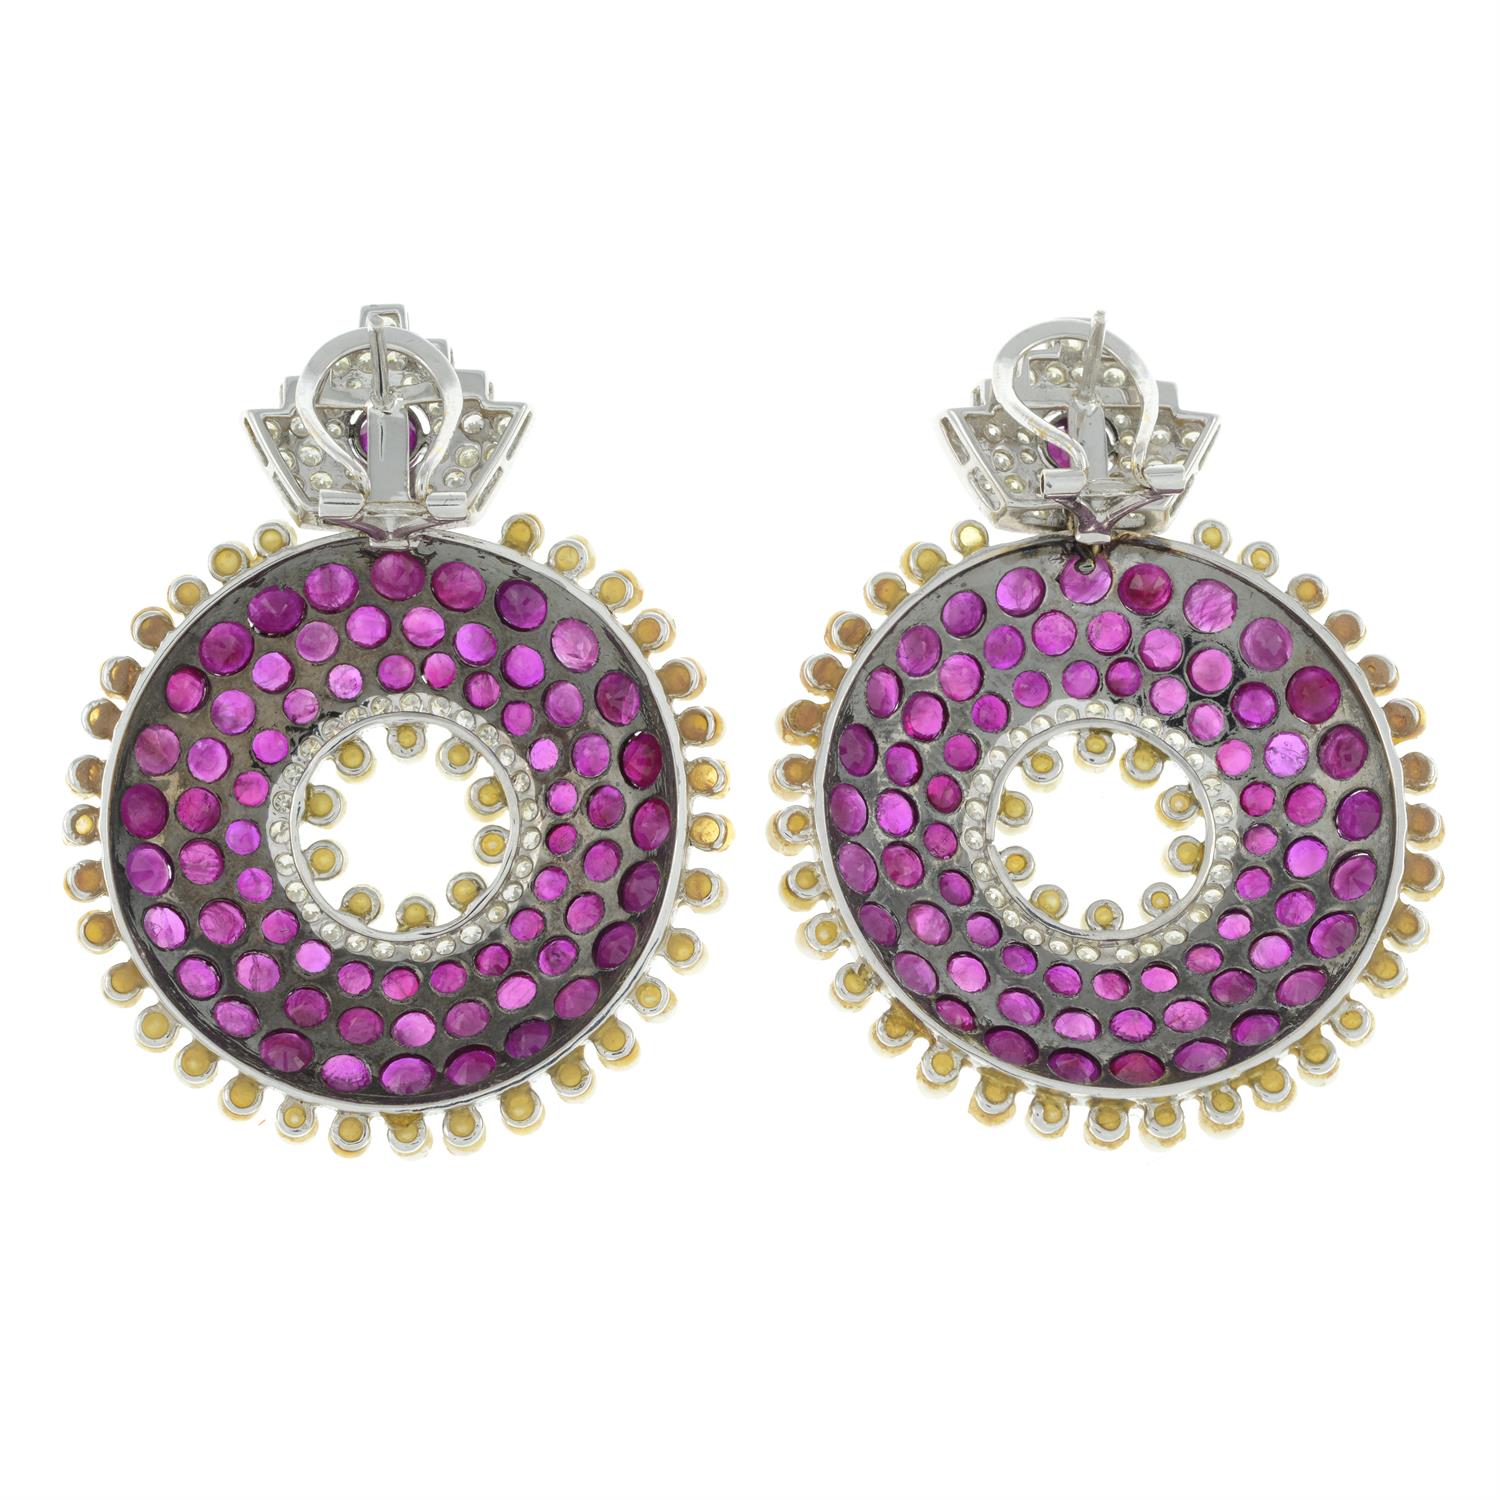 Ruby, seed pearl and diamond earrings - Image 3 of 3